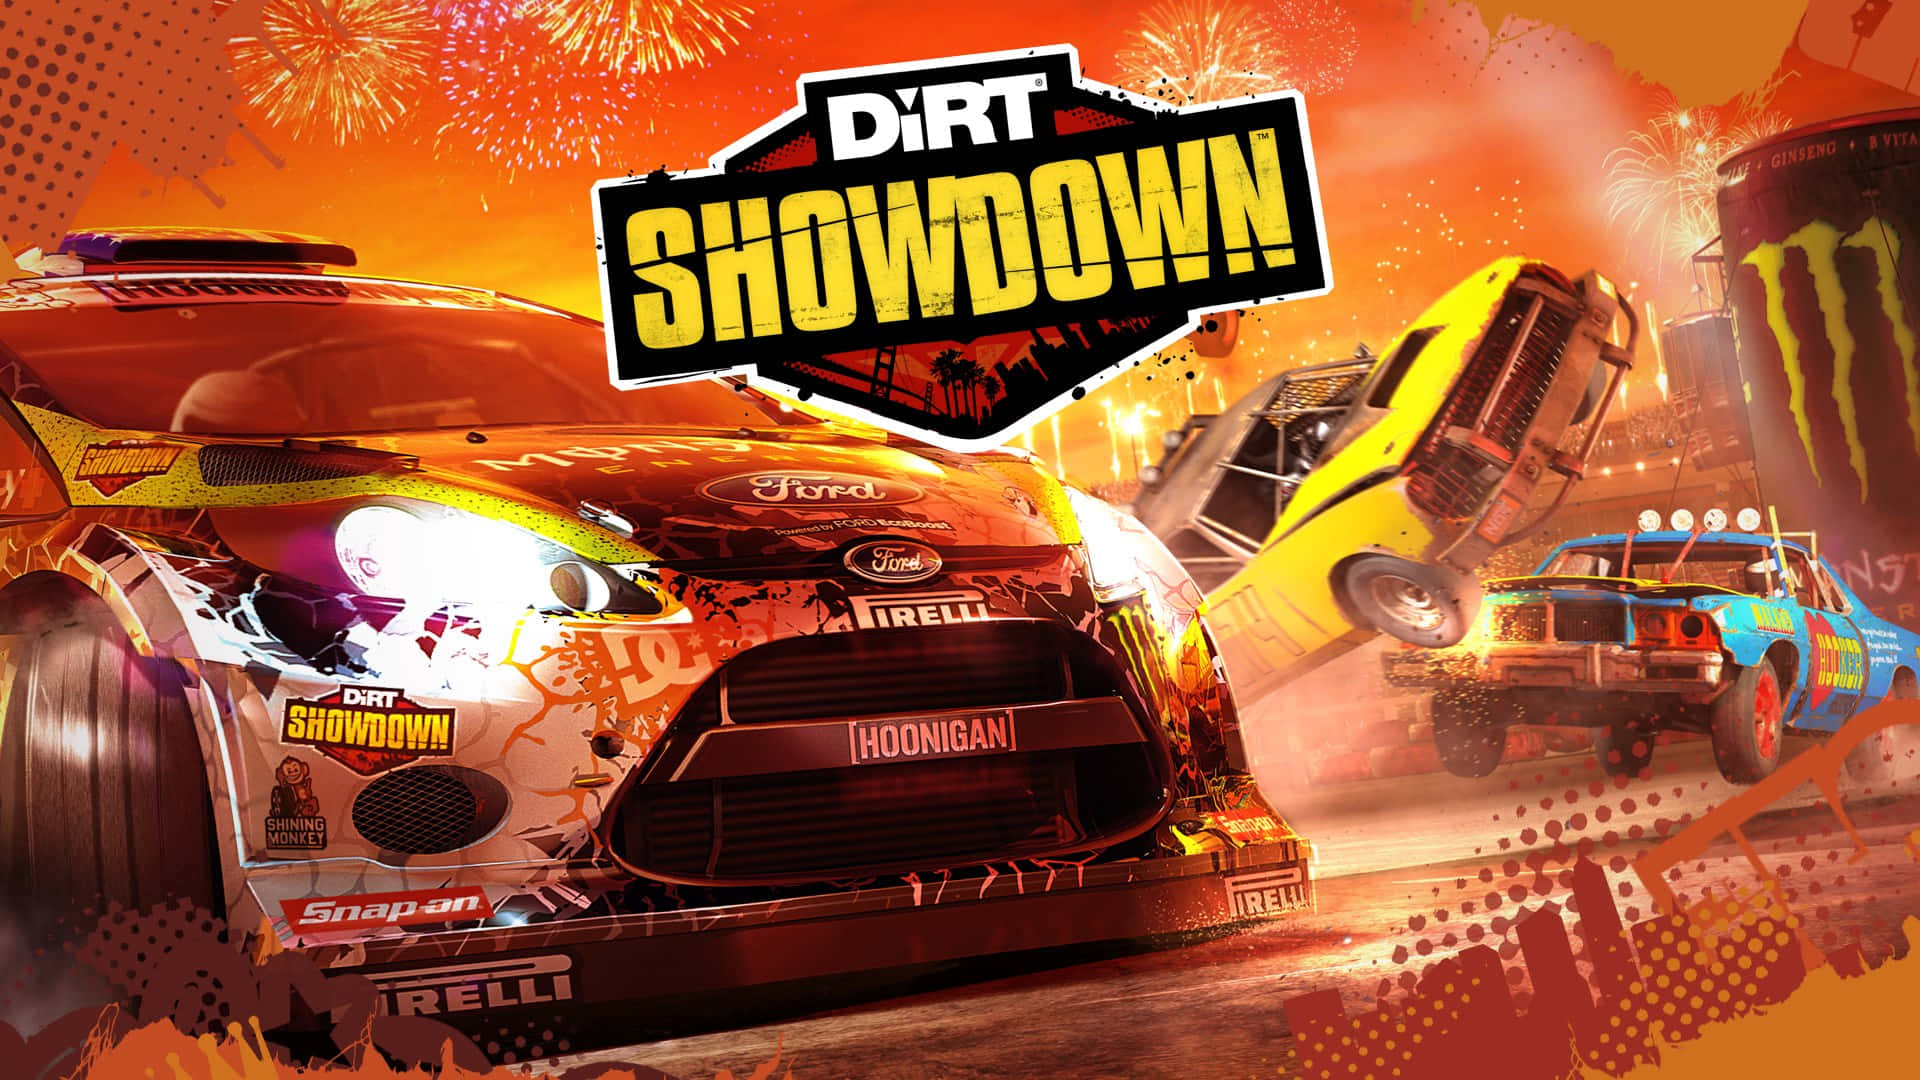 Hd Dirt Showdown Background Wallpaper